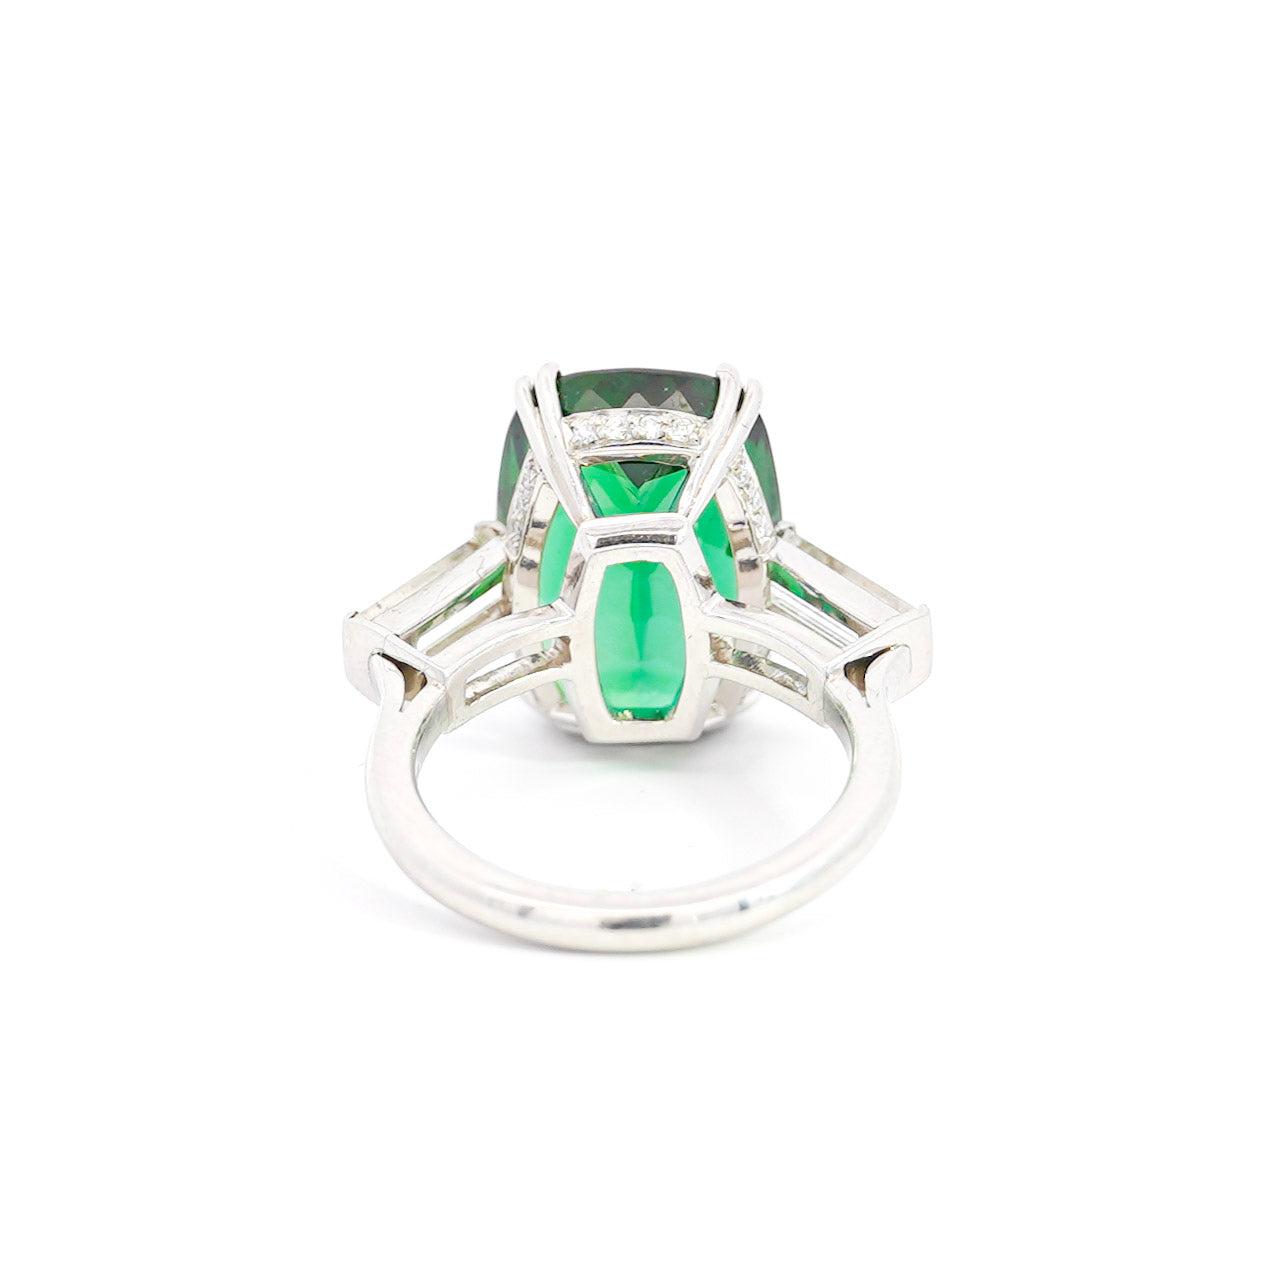 12.68 Carat Zoisite Green Tanzanite & Diamond Ring in Platinum 950 | IGI Certified